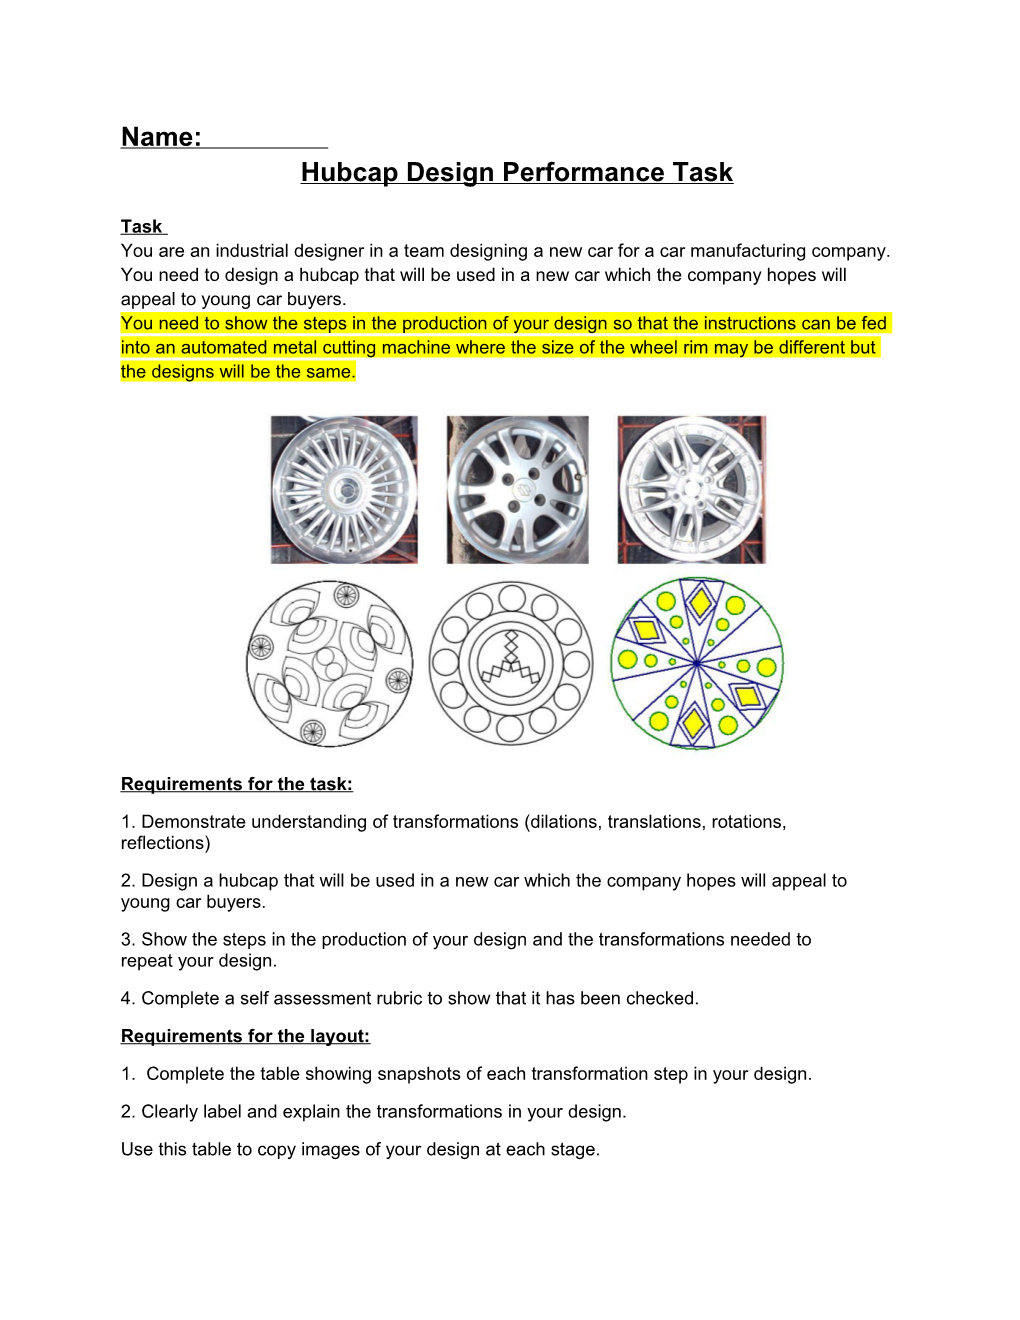 Hubcap Design Performance Task